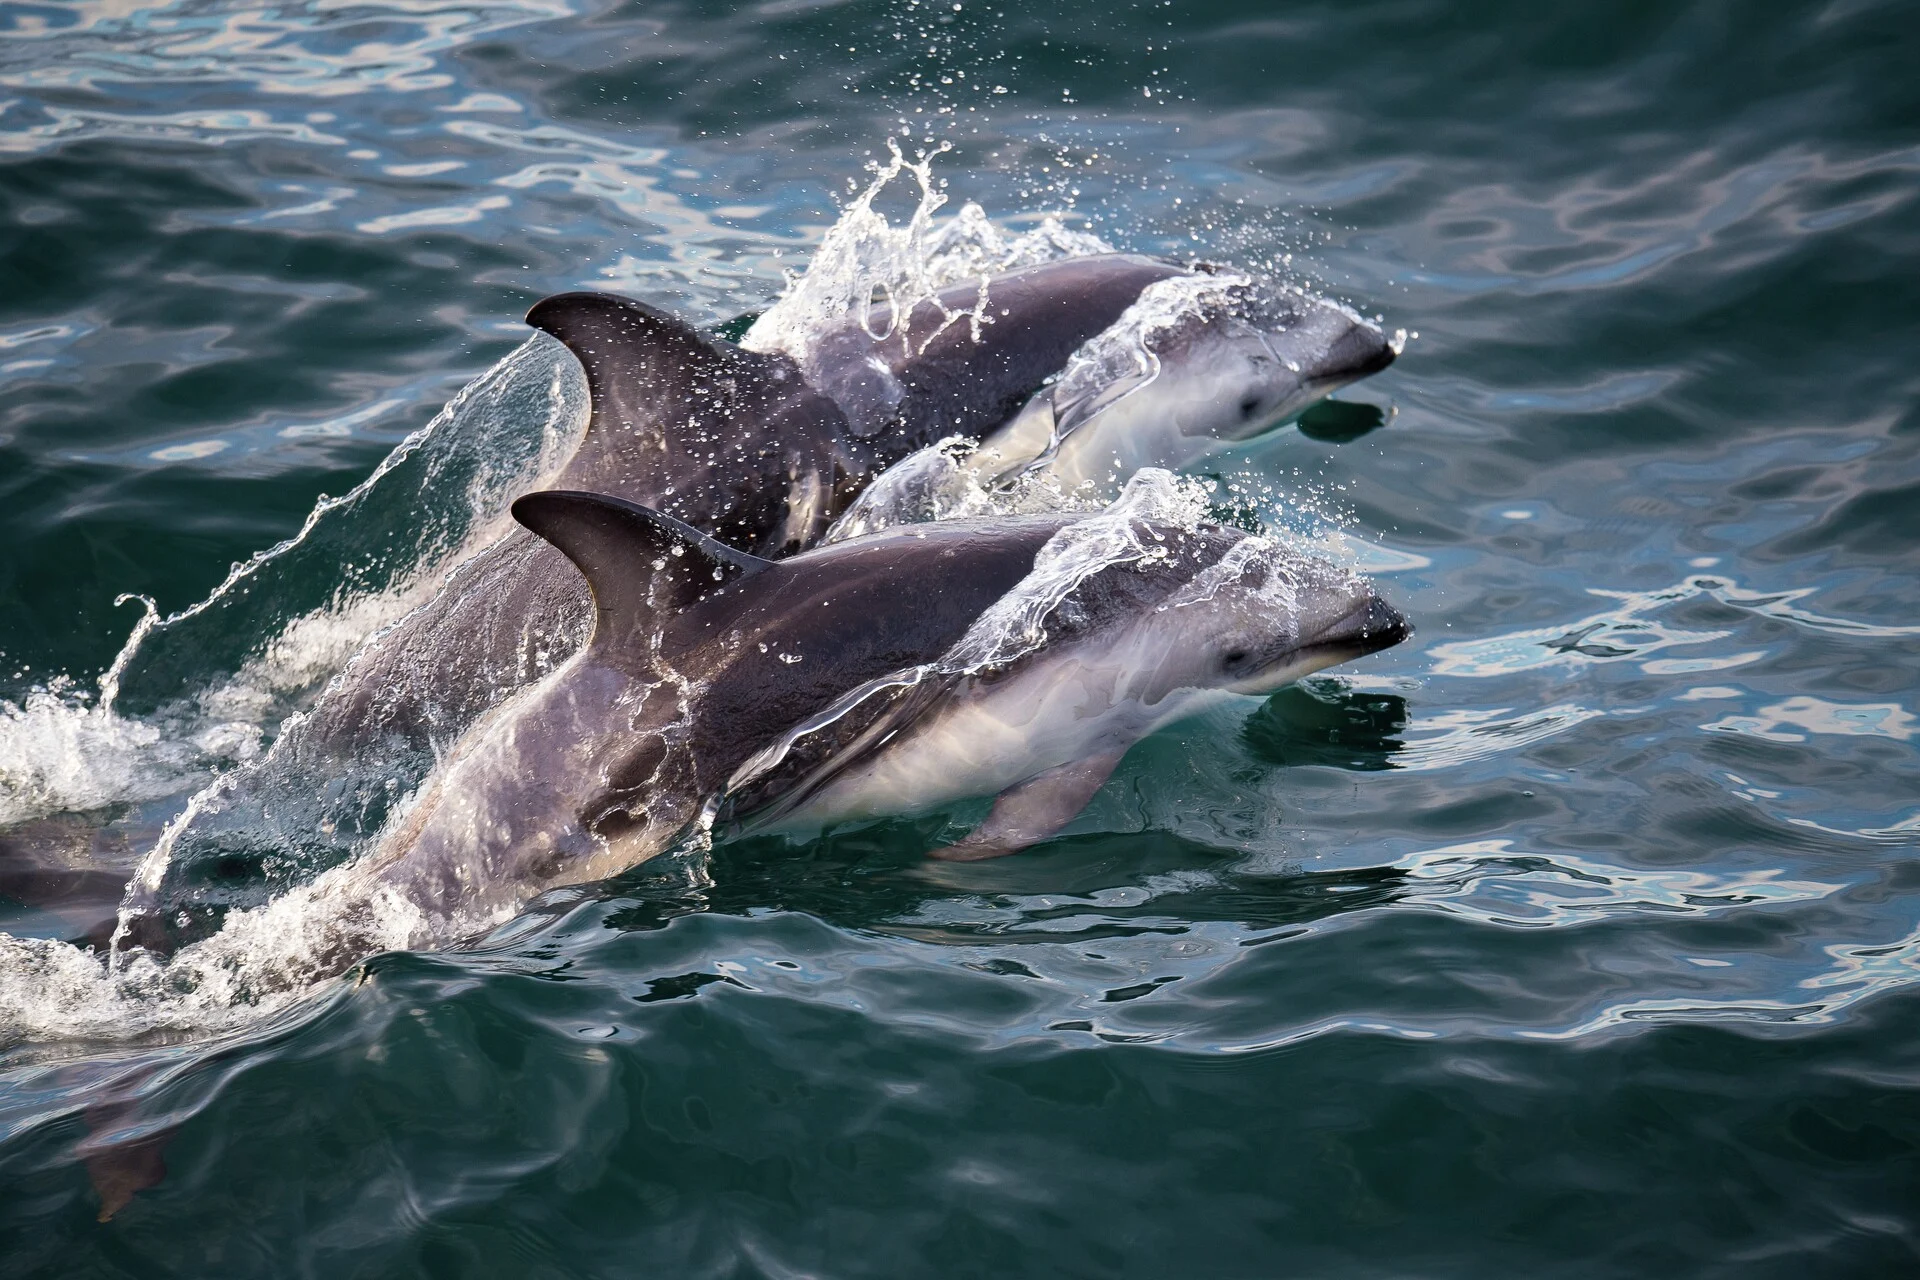 Dolphin. Credit: Andreas Kalvig Anderson / Hurtigruten